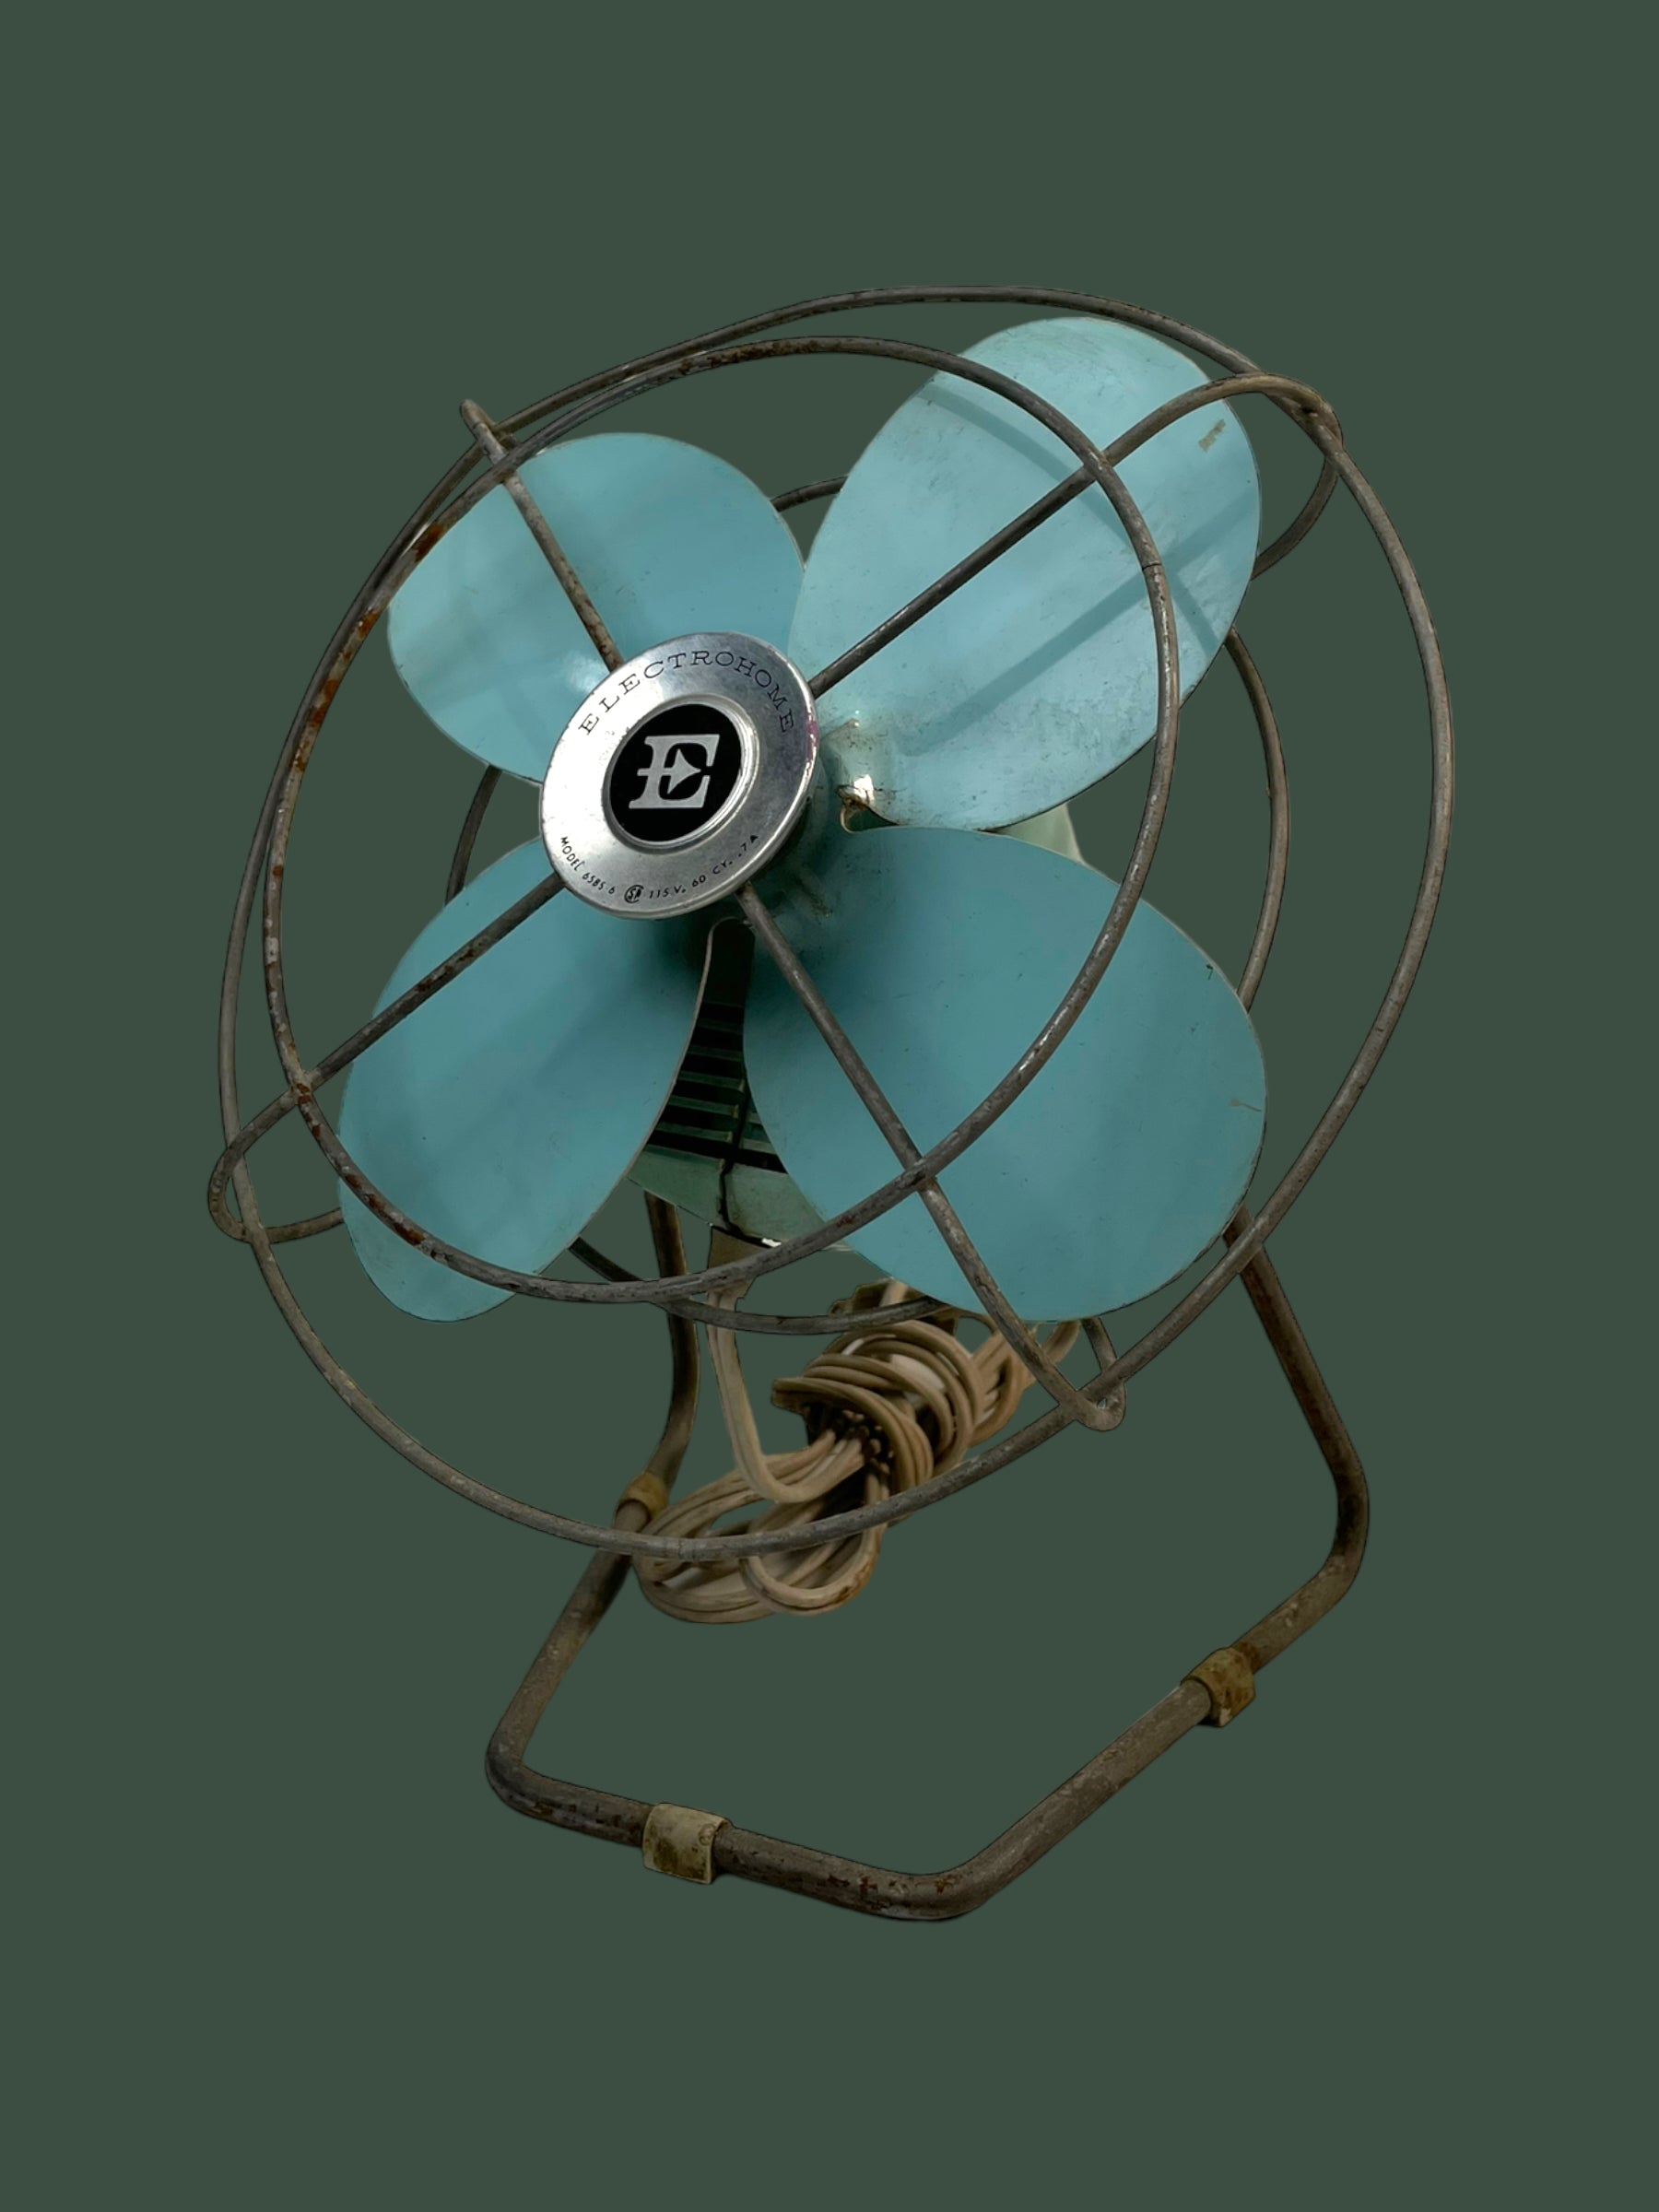 Vintage Blue Electrohome Metal Fan